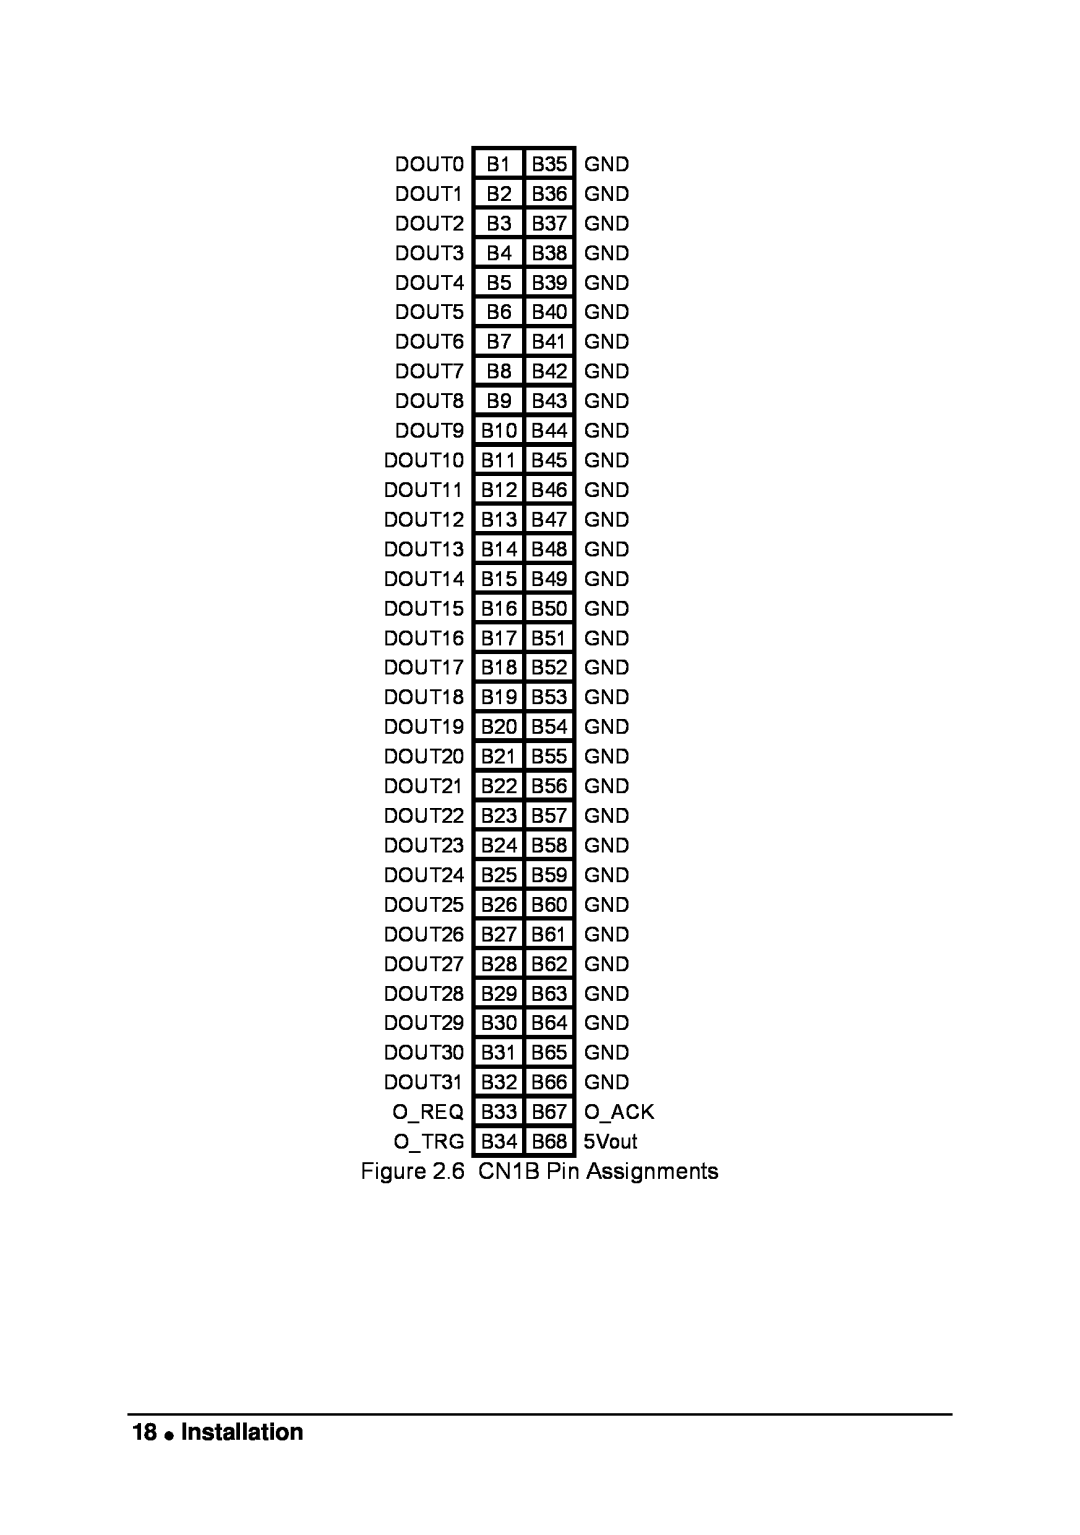 Intel LPCI-7200S manual 6 CN1B Pin Assignments, Installation 